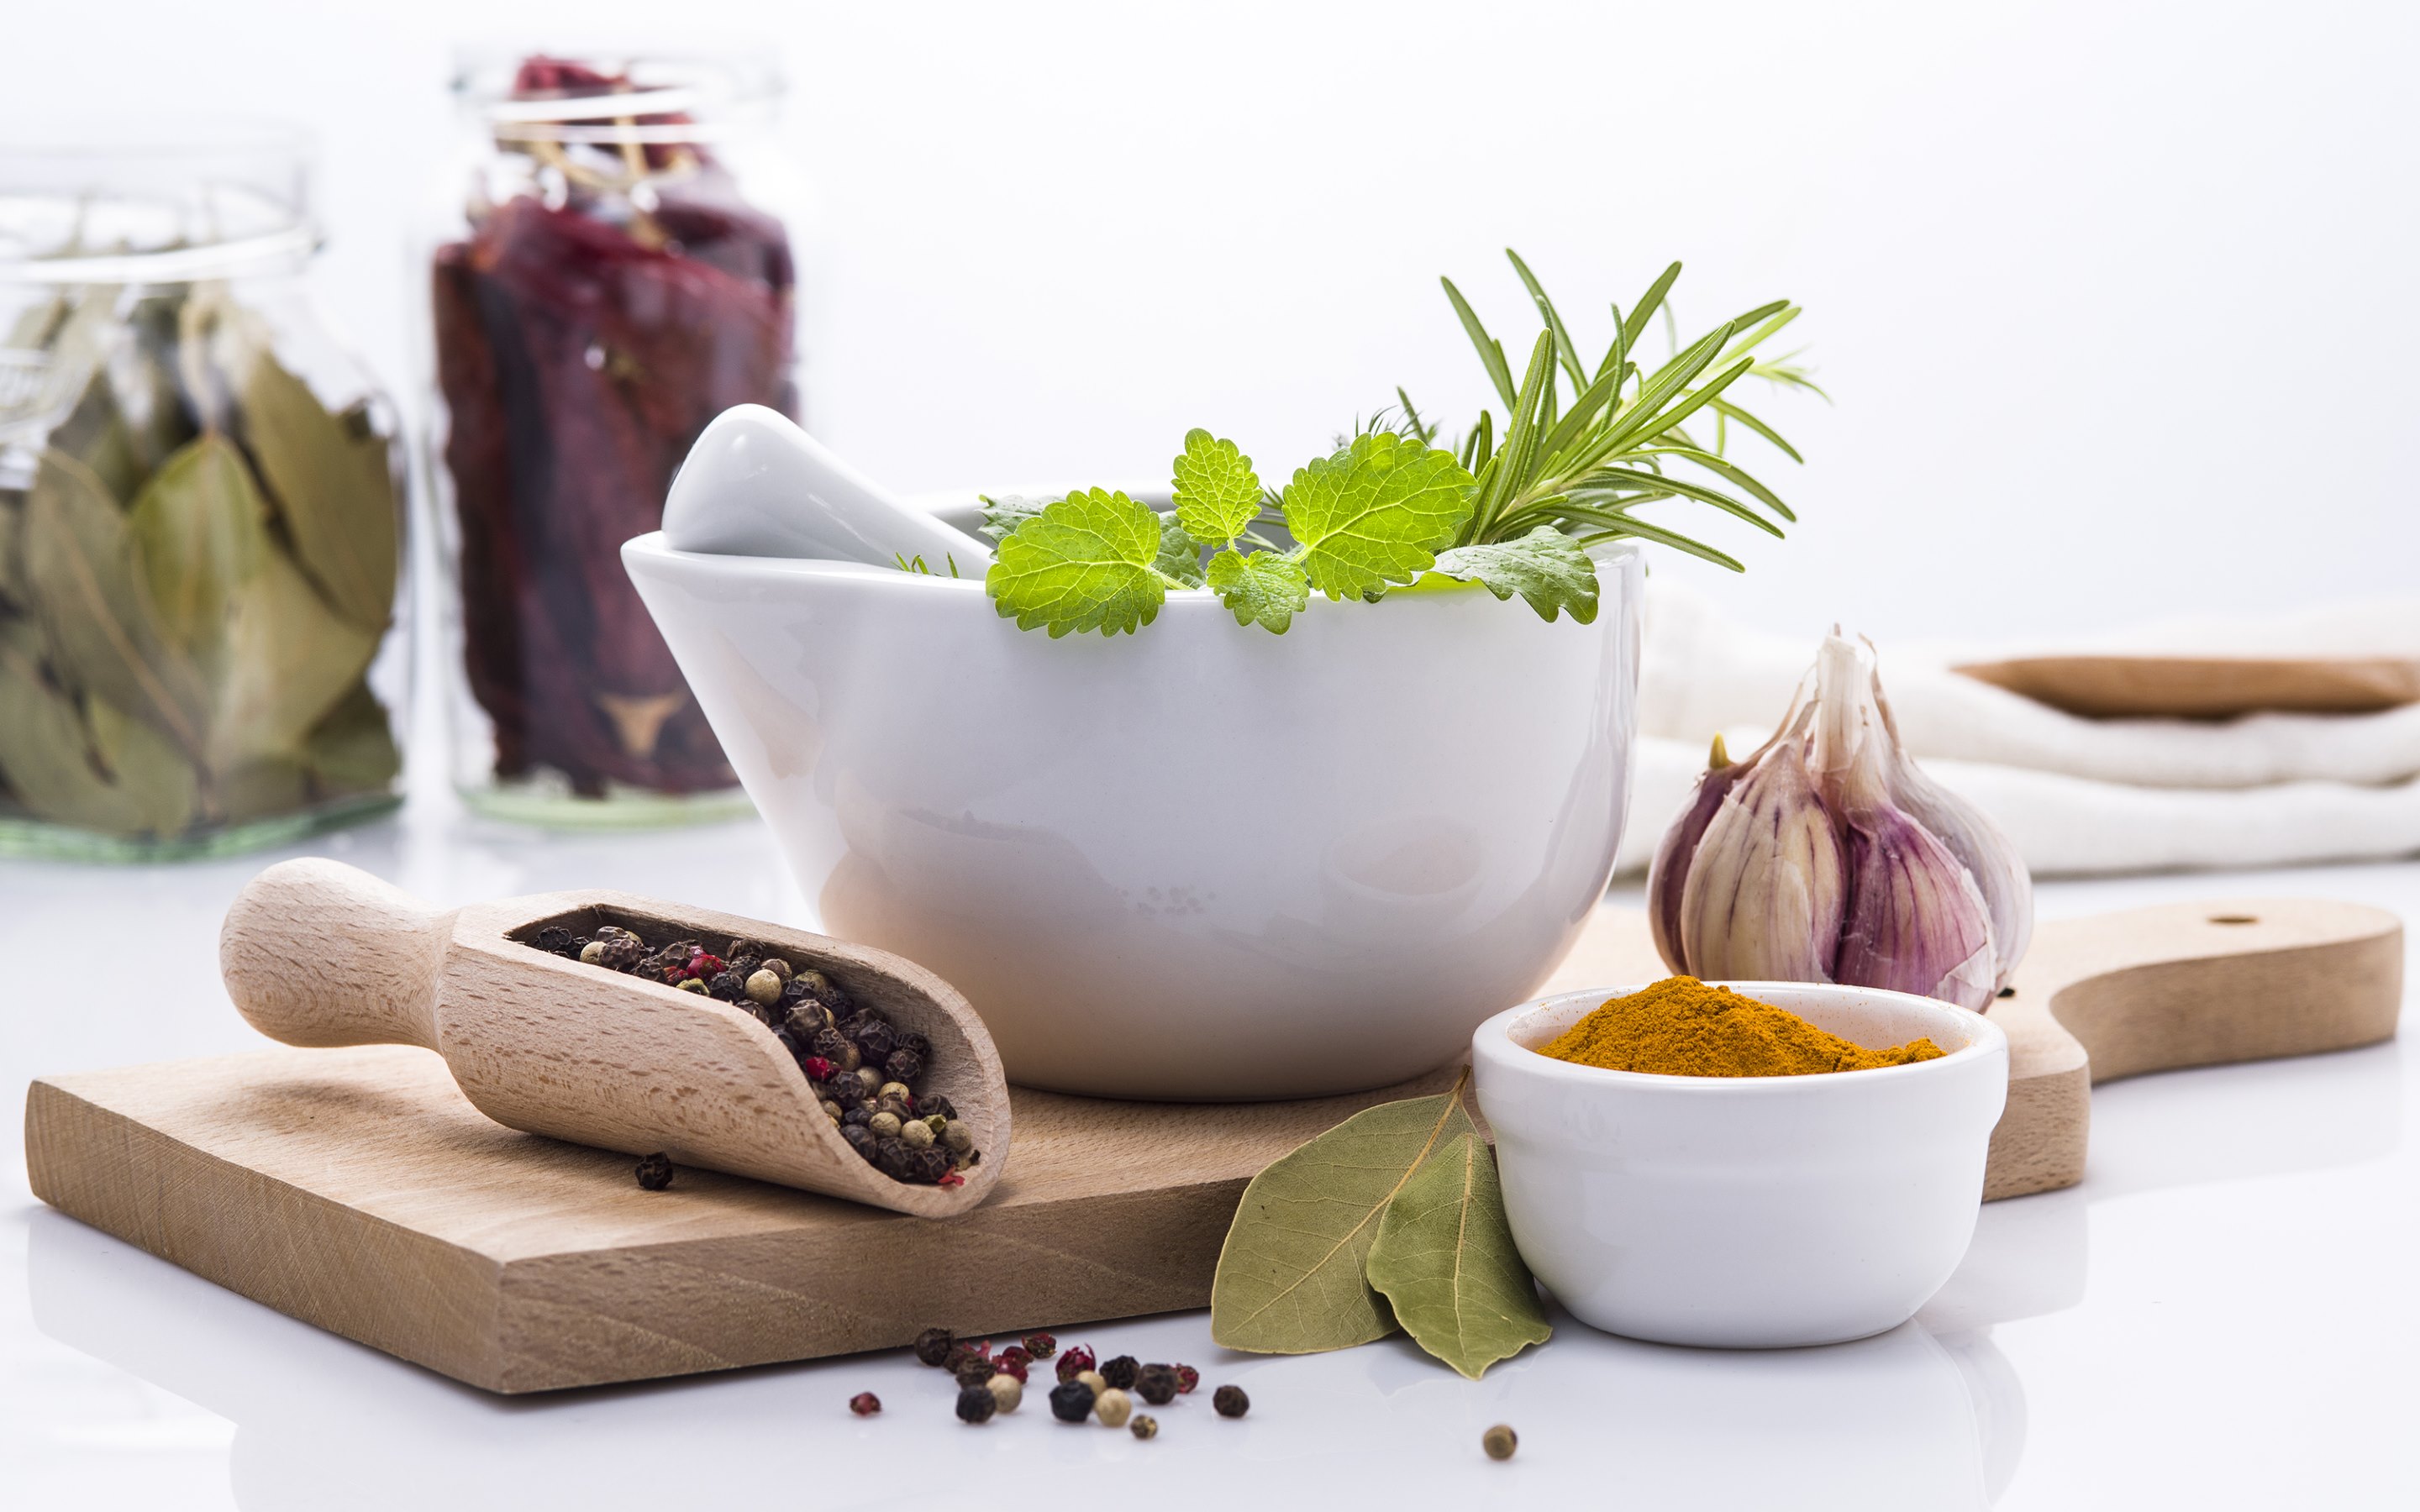 Herbs, Garlic, Pepper, Turmeric And Rosemary by Patrycja Tomaszczyk